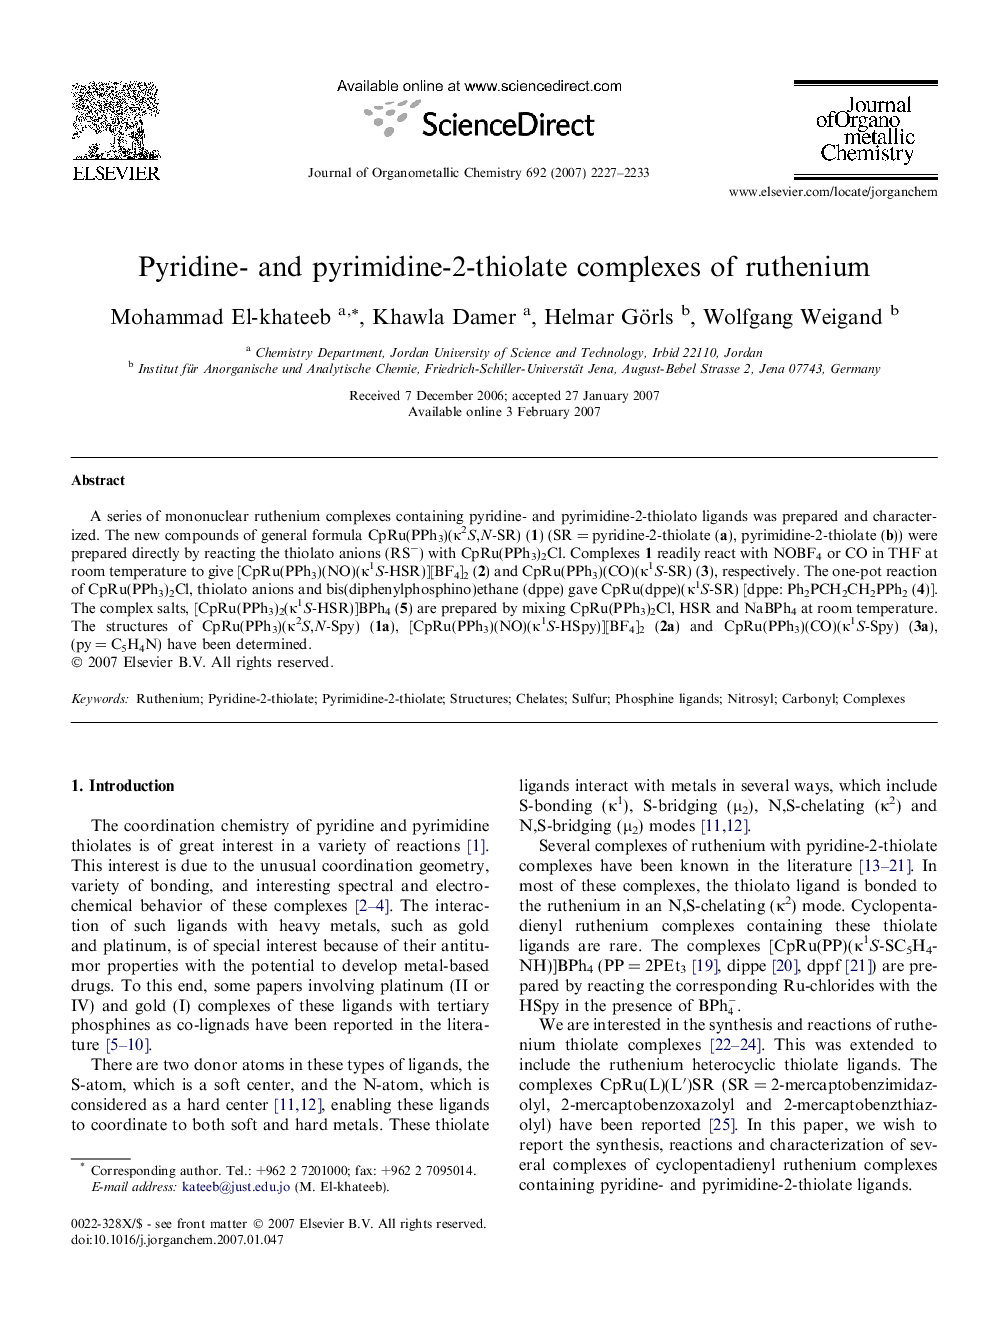 Pyridine- and pyrimidine-2-thiolate complexes of ruthenium